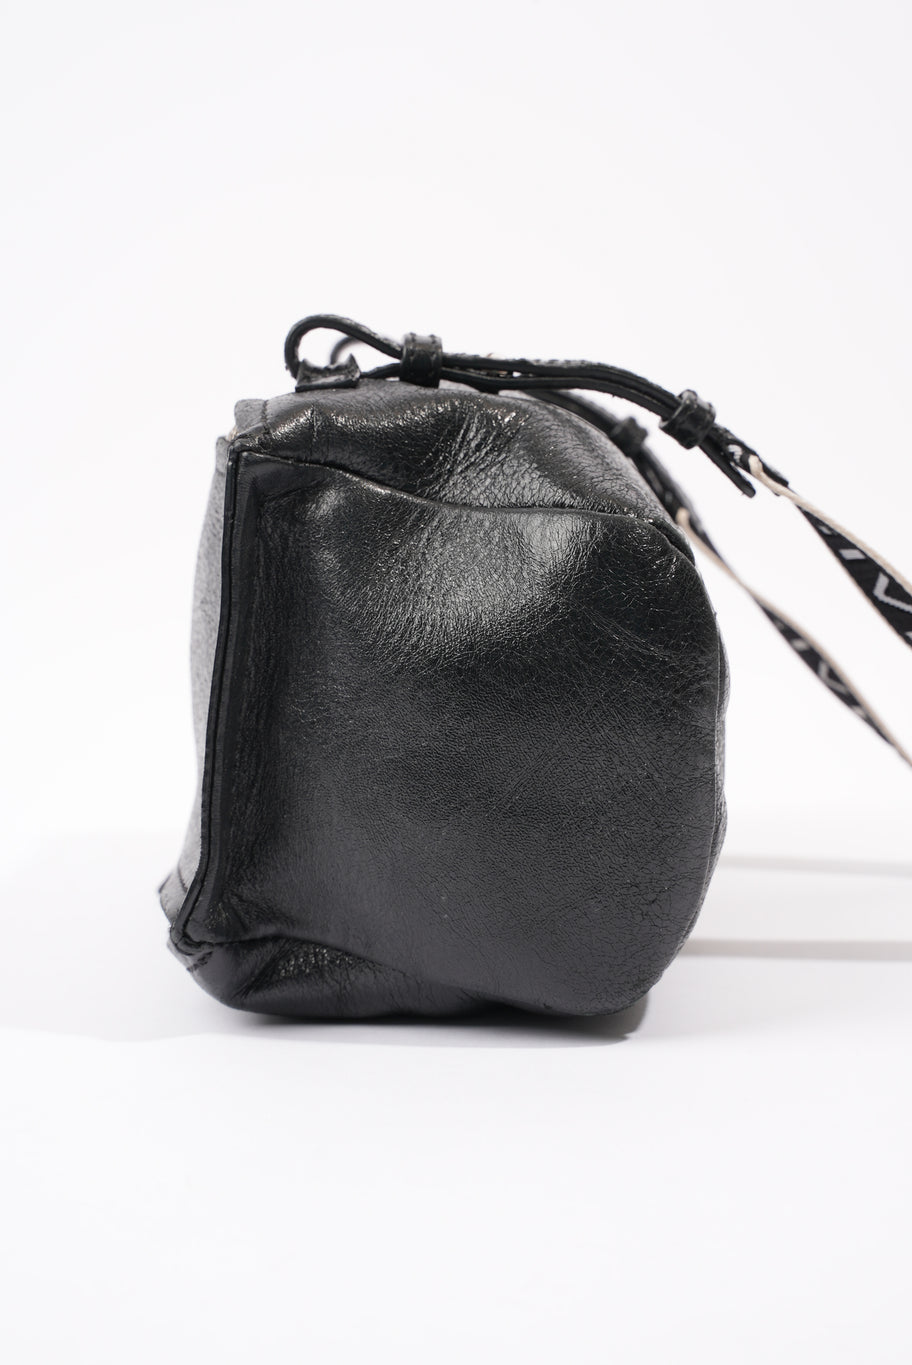 Pandora Bag Black Leather Small Image 3